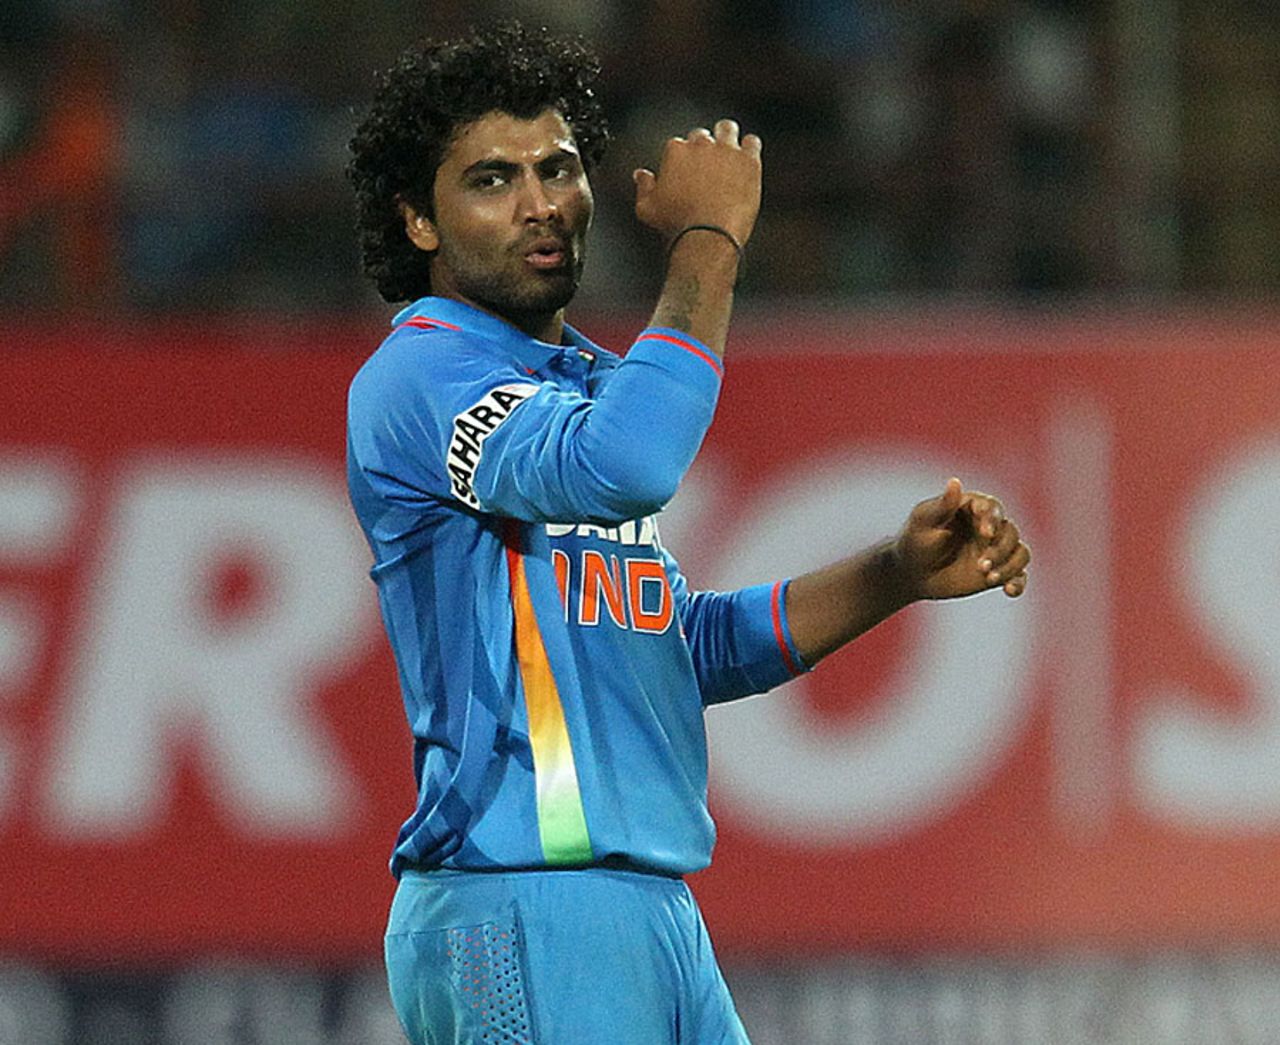 Ravindra Jadeja bowled economically and took important wickets, India v England, 2nd ODI, Kochi, January 15, 2013